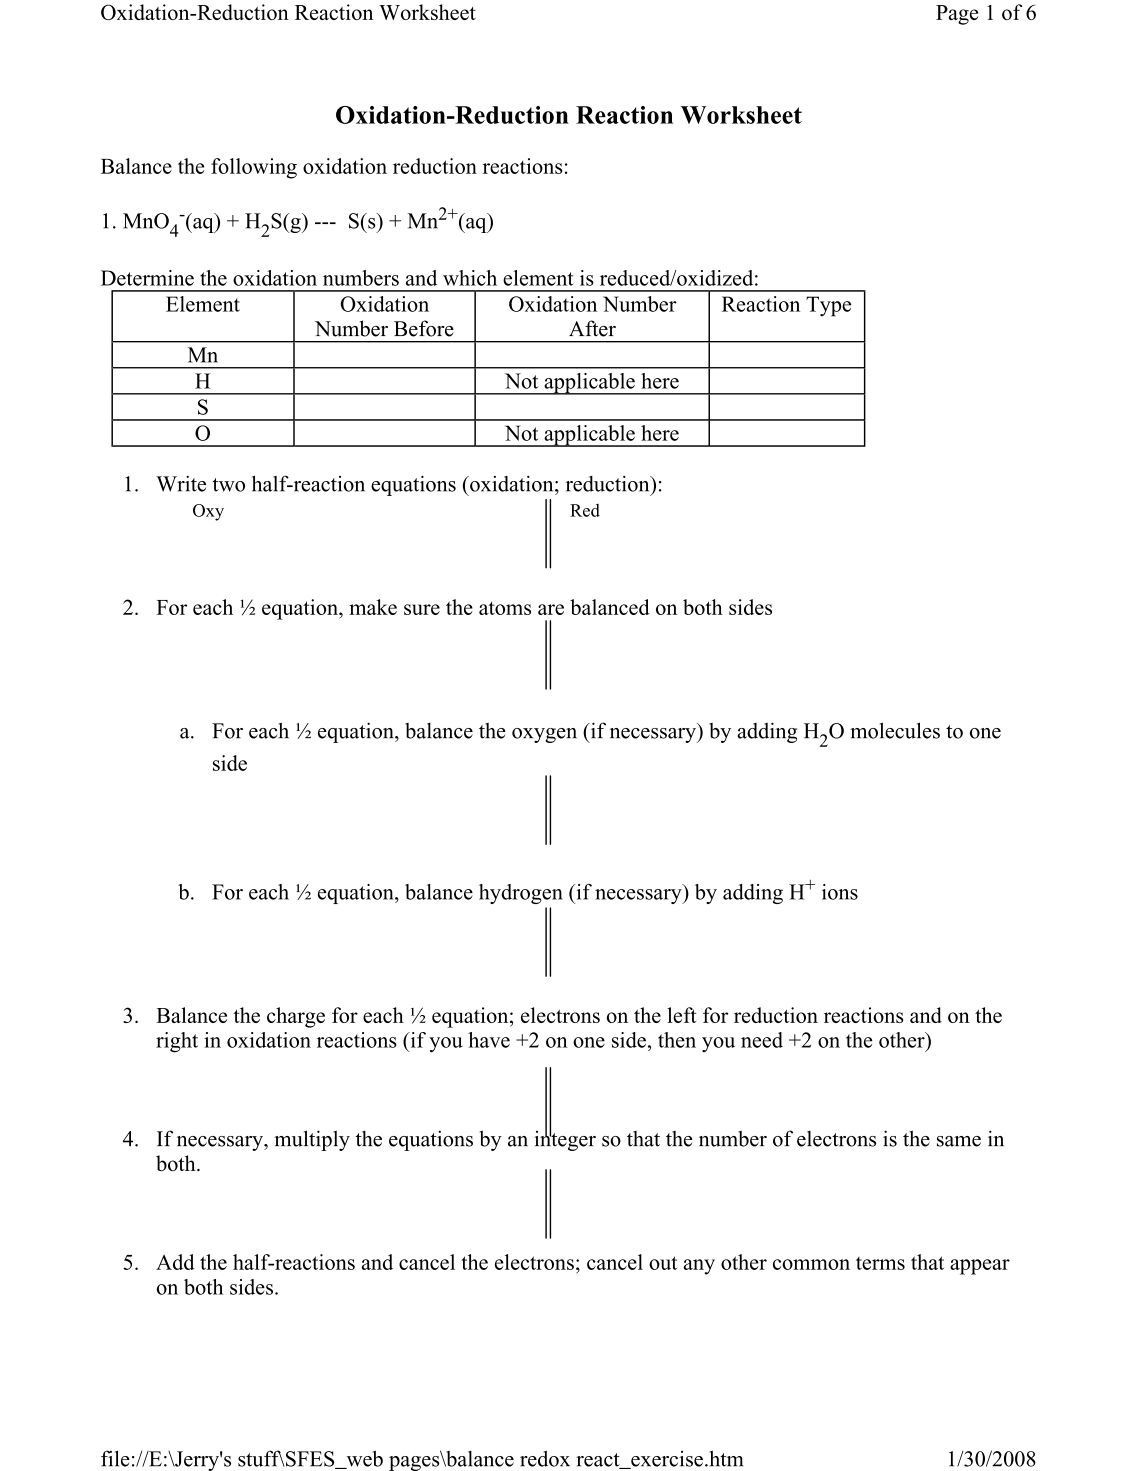 Oxidation Reduction Worksheet Answers 35 Oxidation Reduction Reactions Worksheet Answers